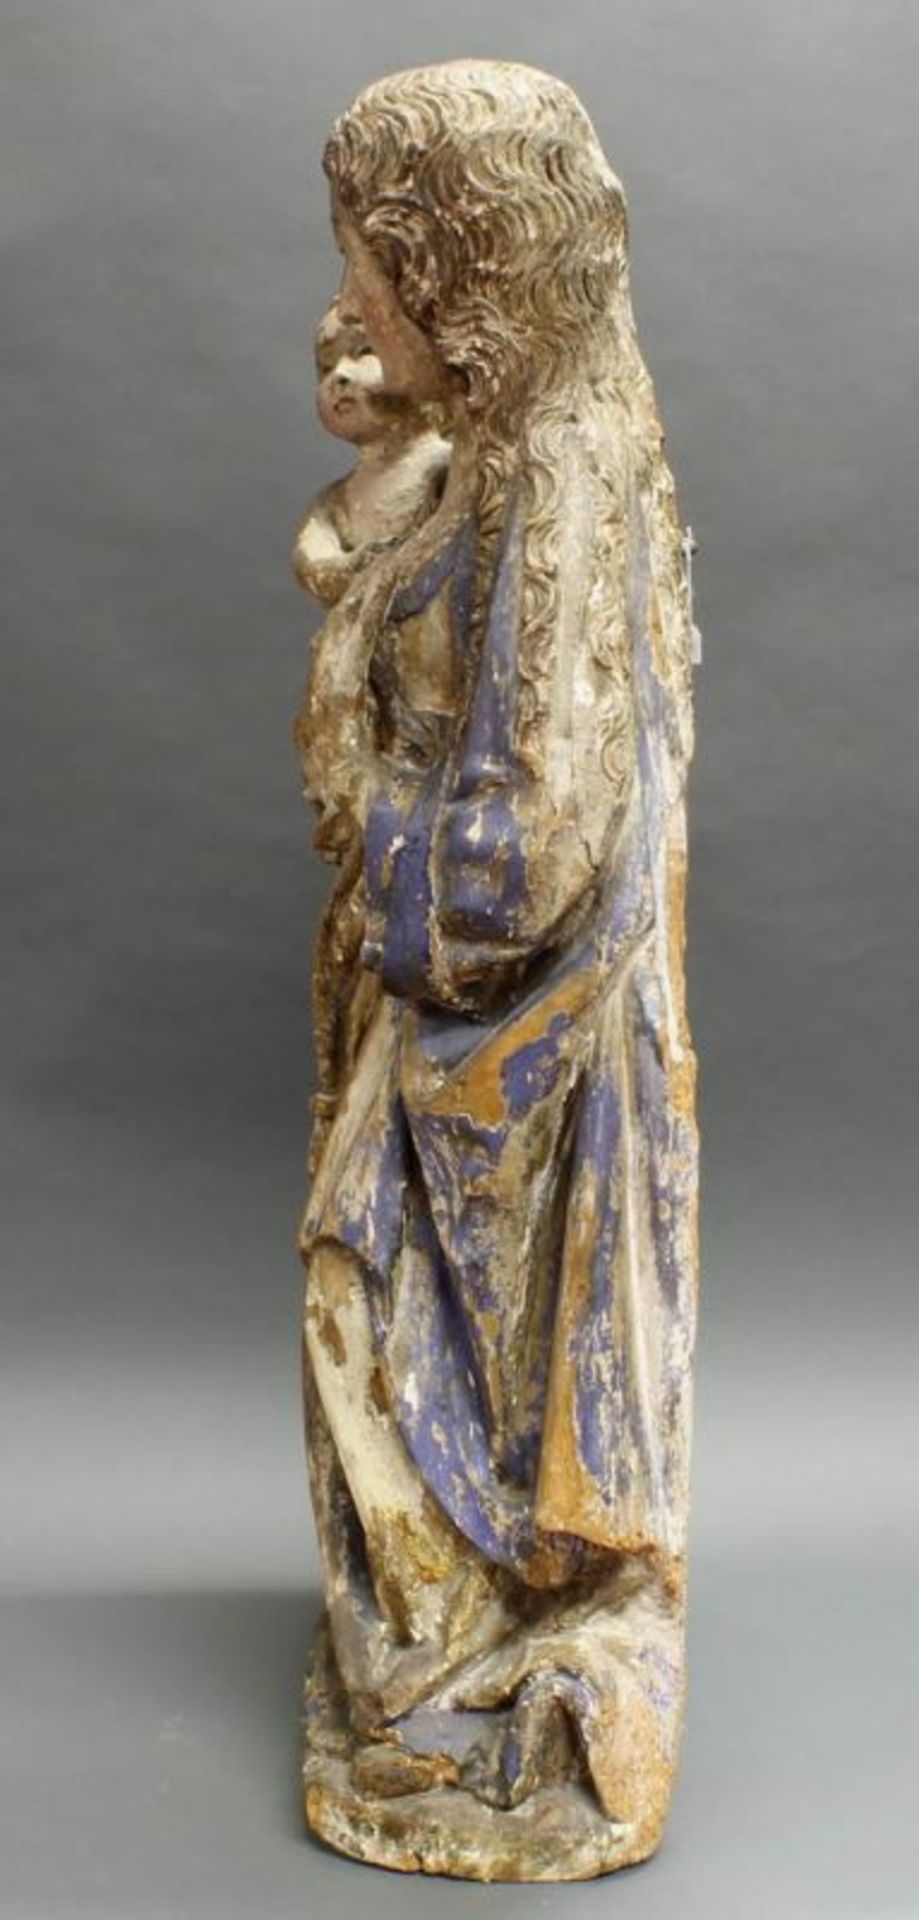 Skulptur, Holz geschnitzt, "Maria lactans", wohl Moselländisch, 2. Hälfte 15. Jh., 109 cm hoch, - Image 6 of 9